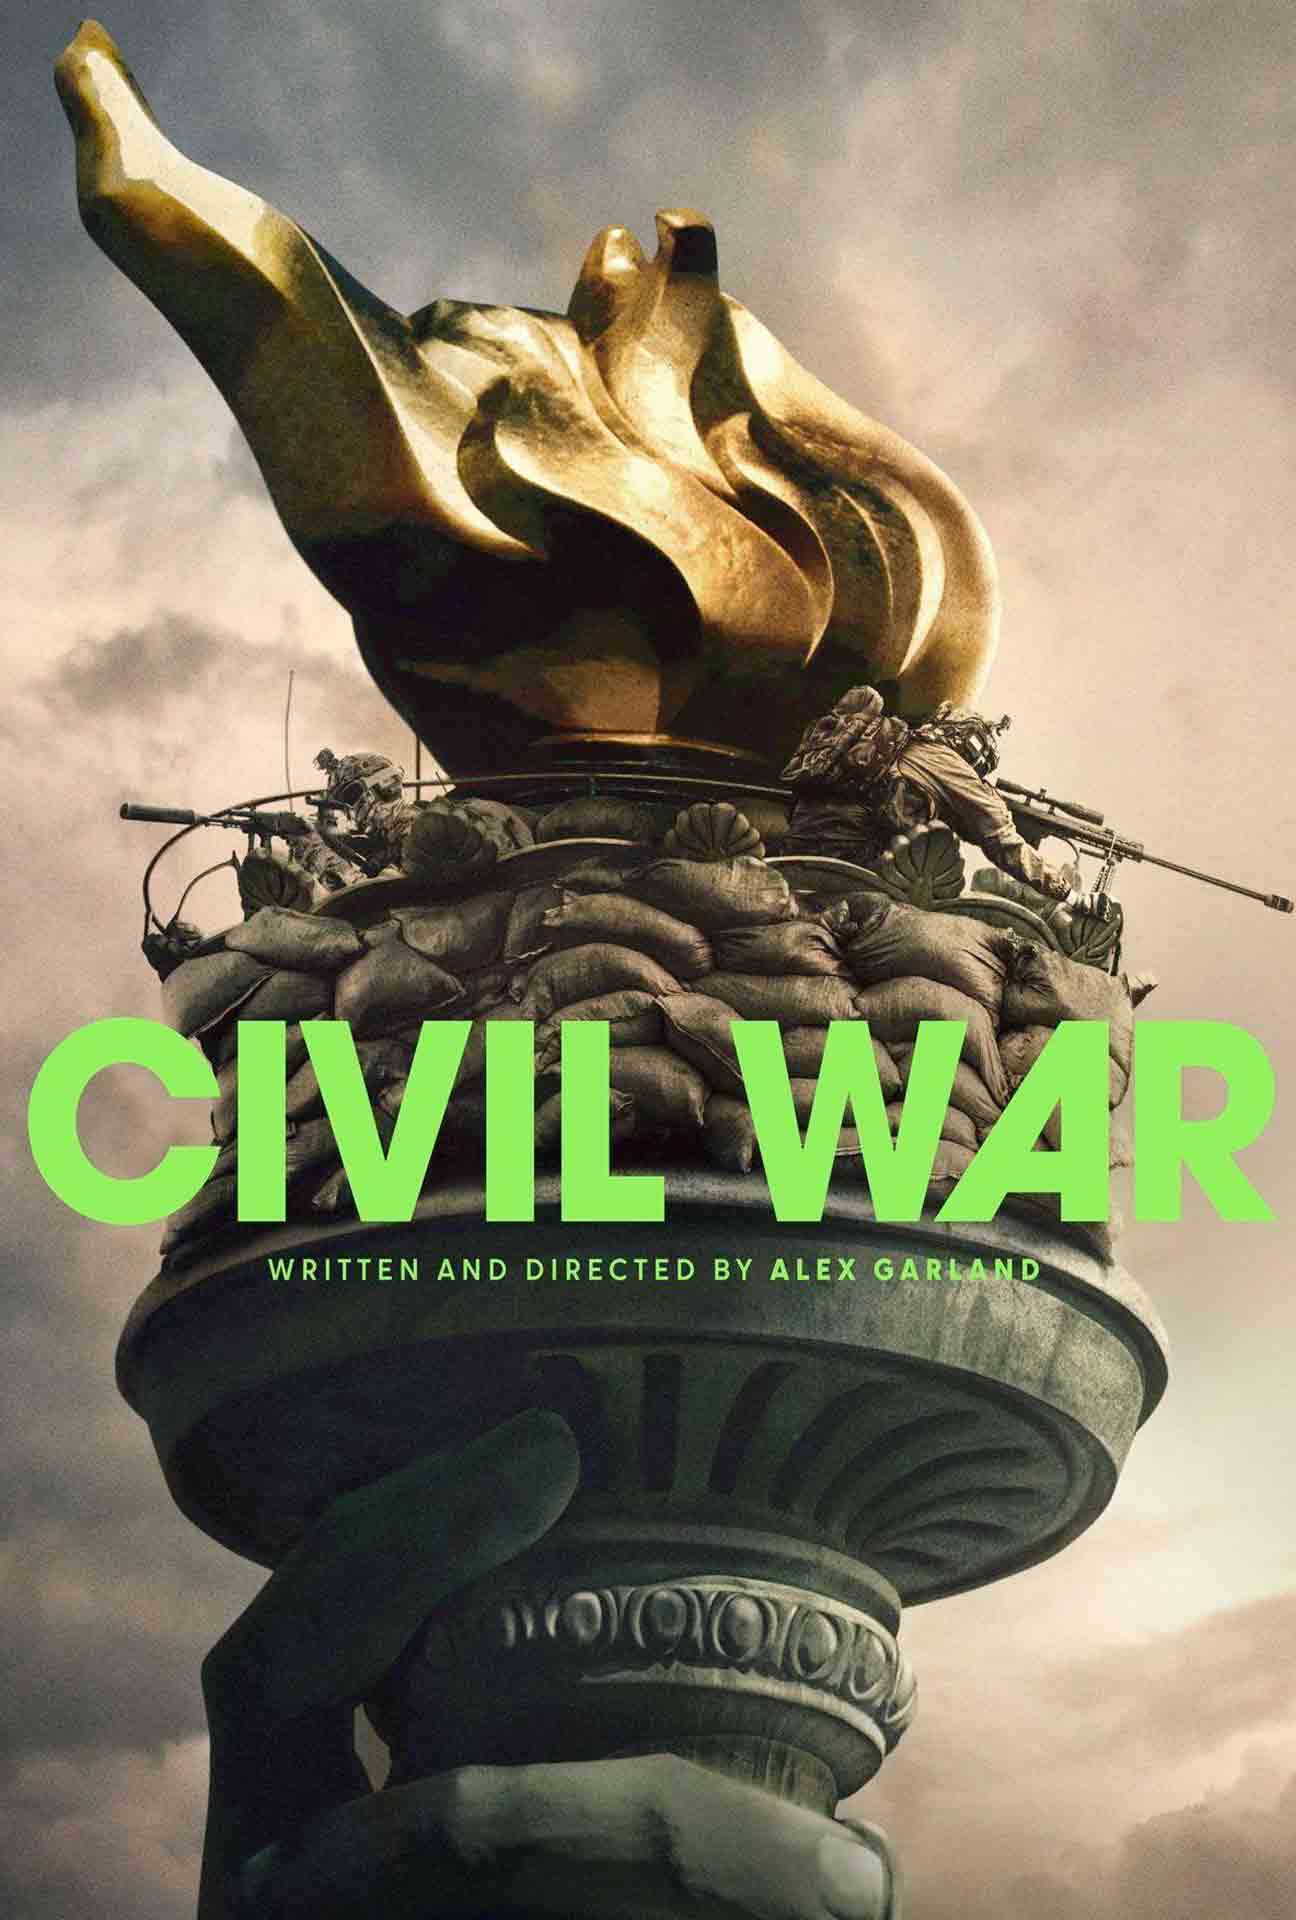 Movie Poster for Civil War.